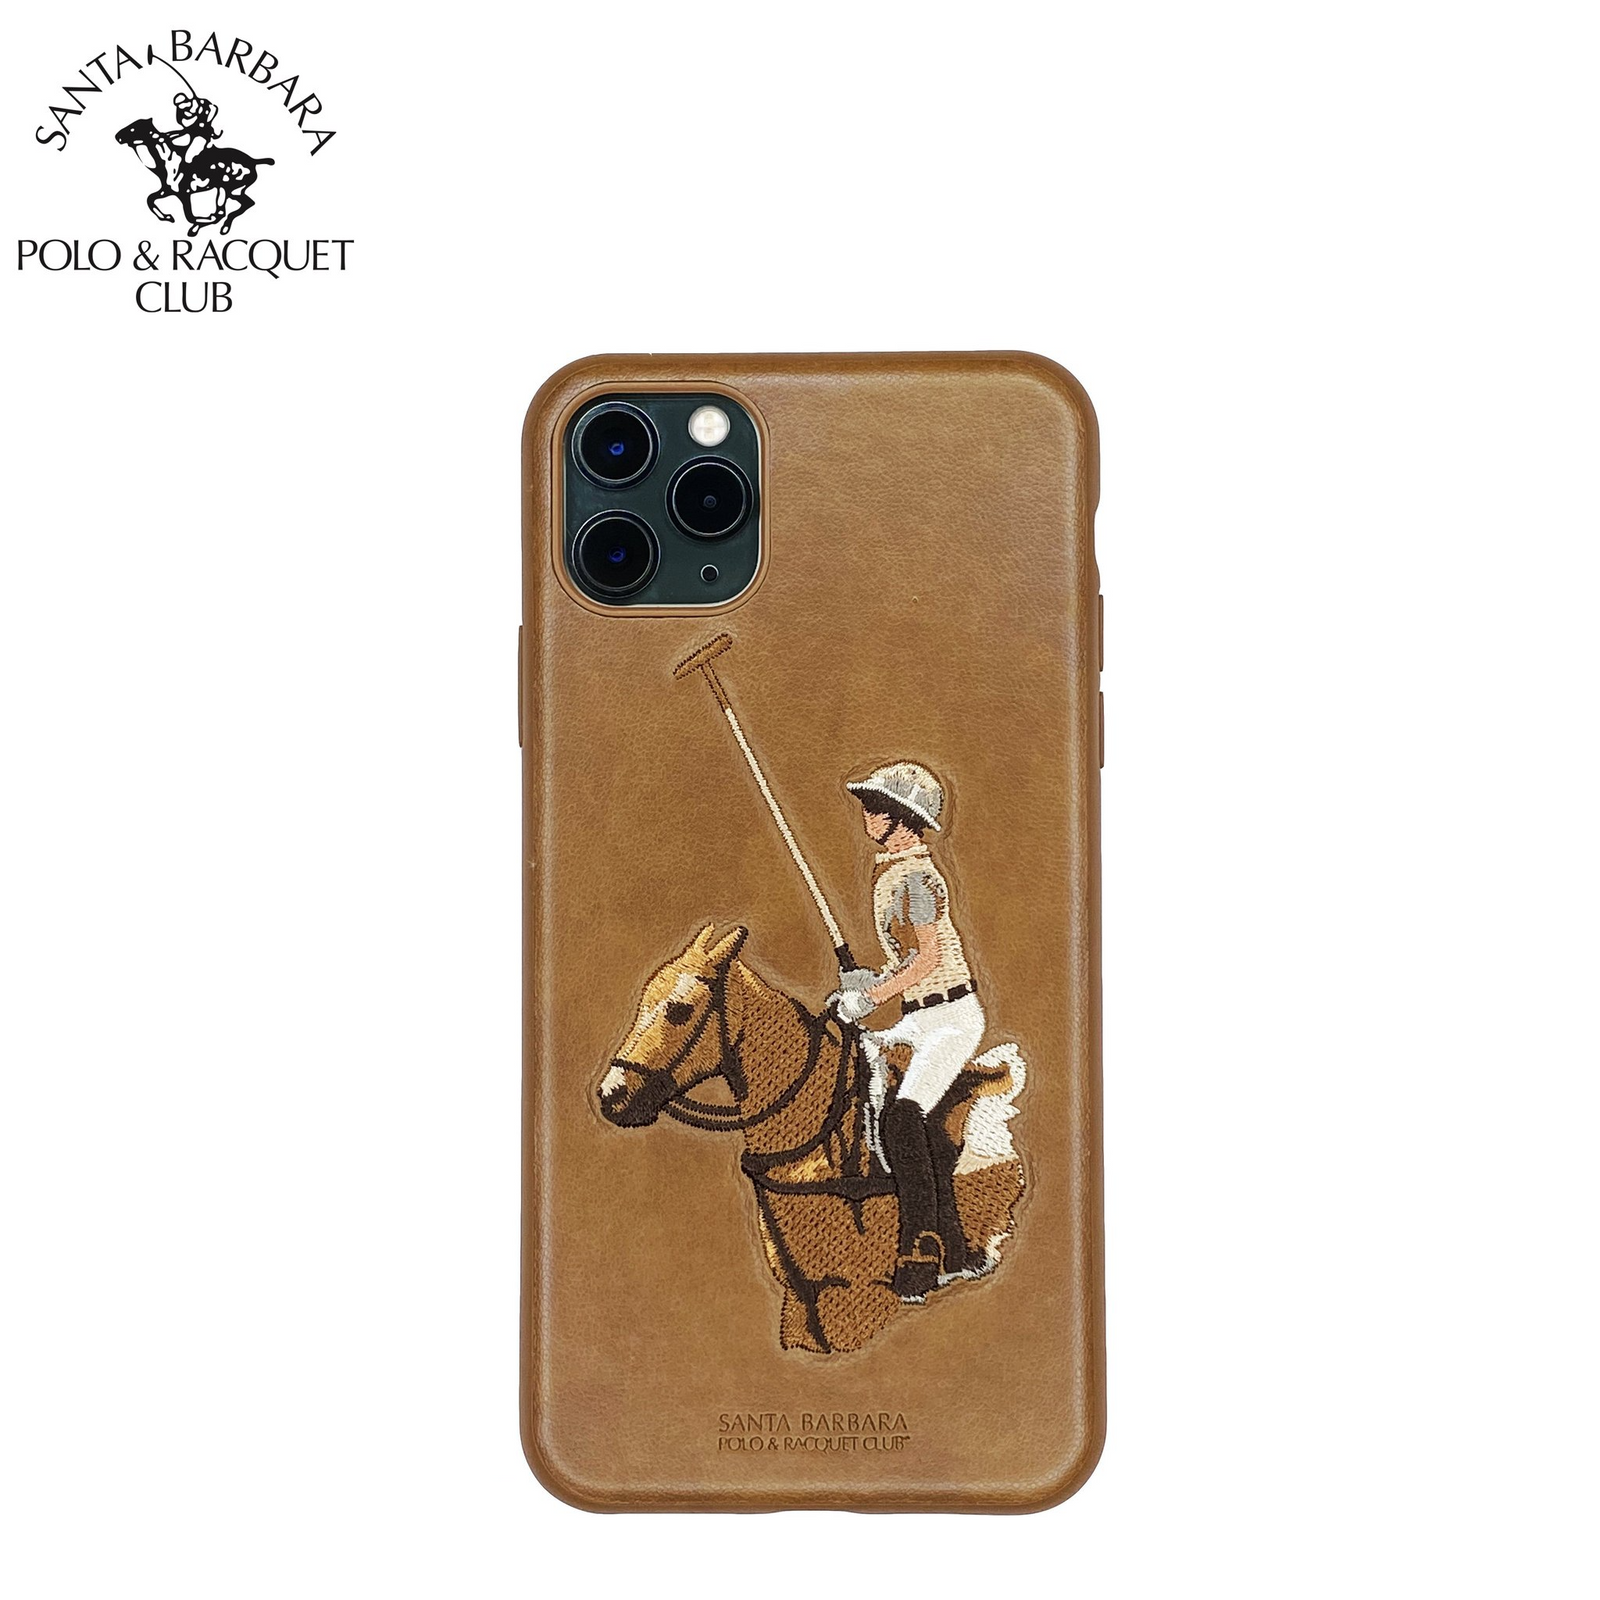 Santa Barbara Polo & Racquet Club Jockey Series Genuine Leather Case Cover for Apple iPhone 11 Pro 5.8"